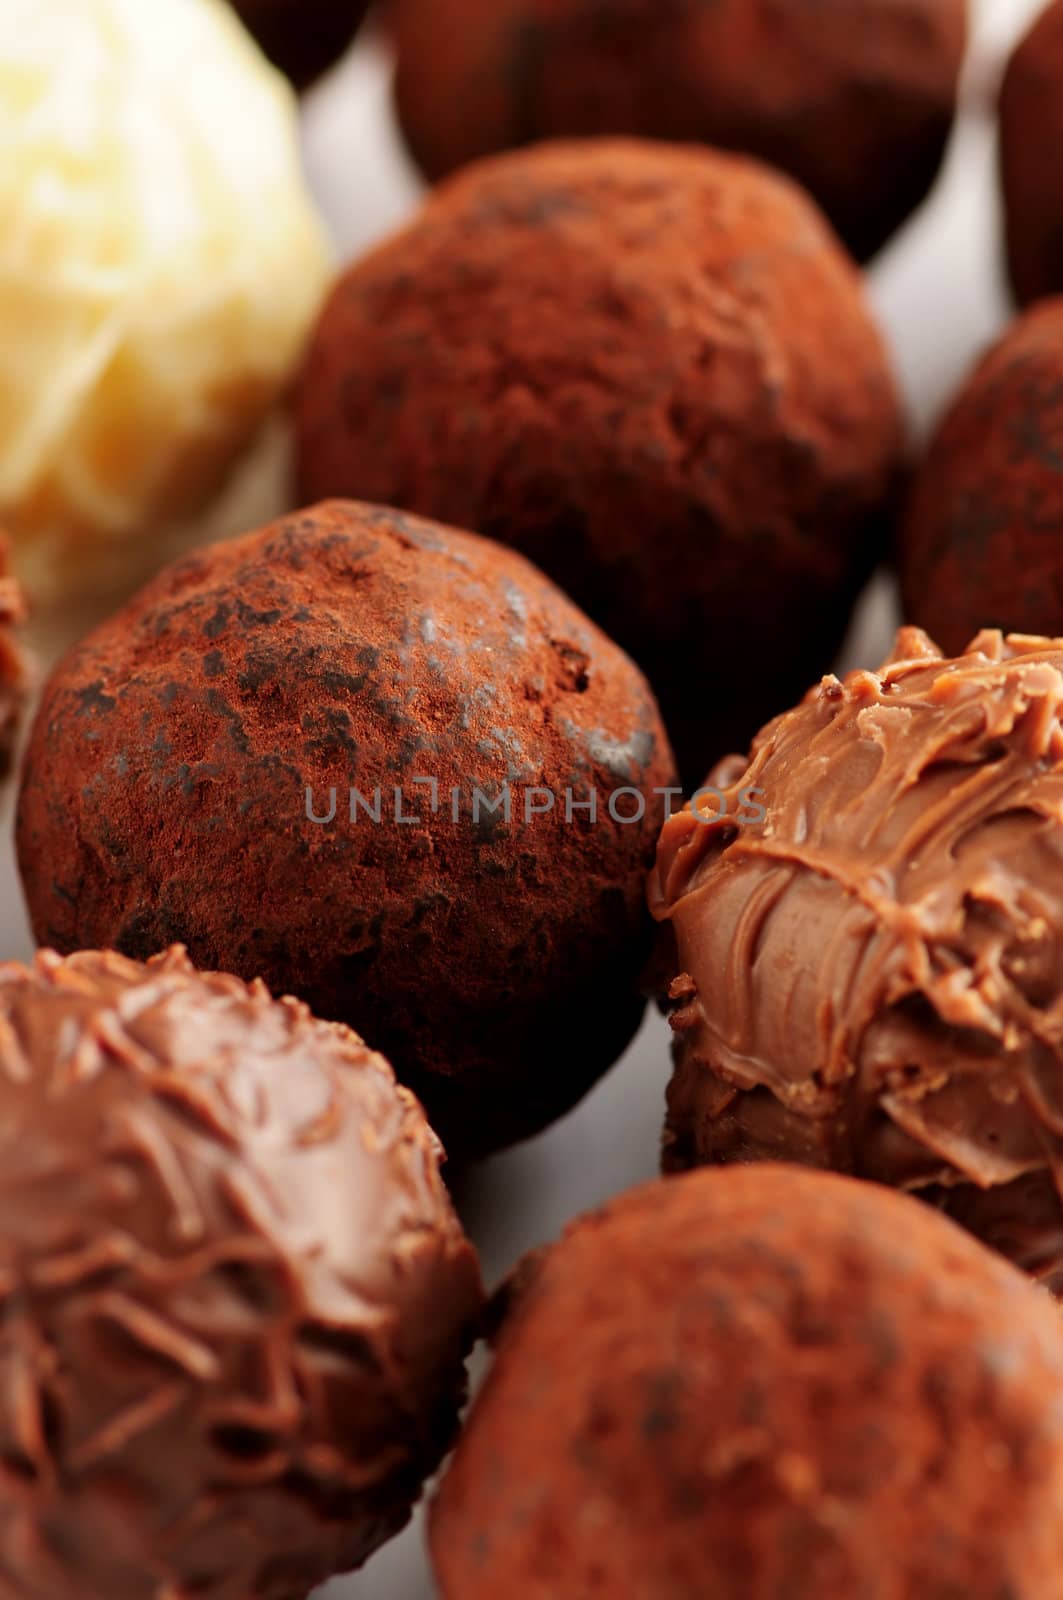 Several assorted gourmet chocolate truffles close up